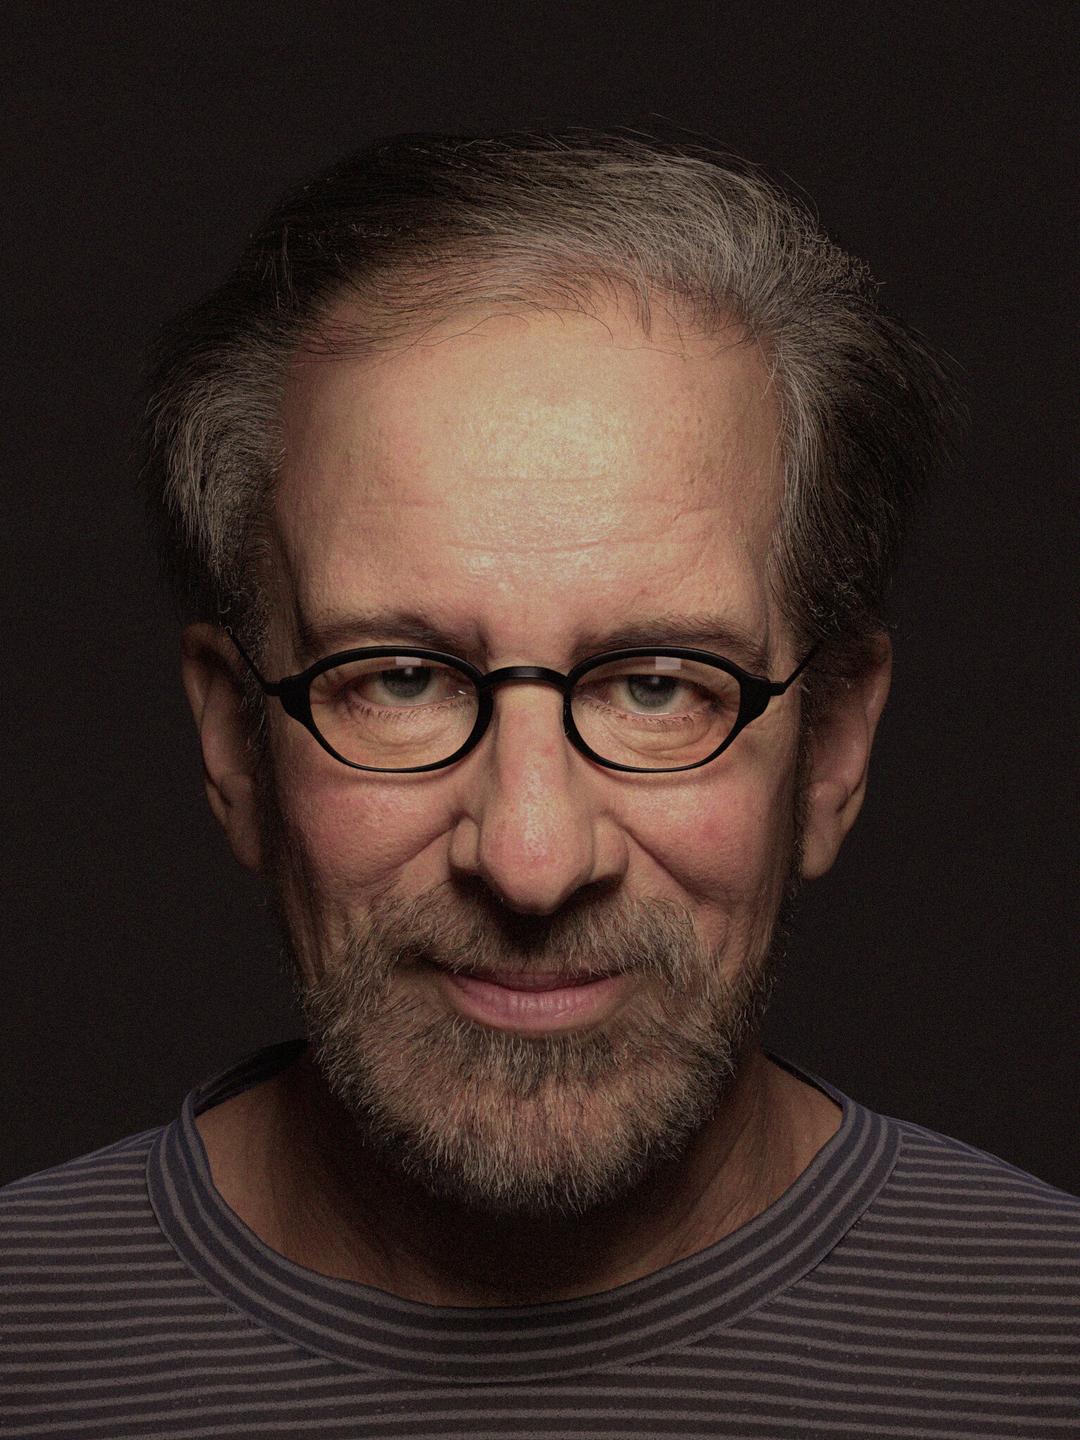 Steven Spielberg story of success